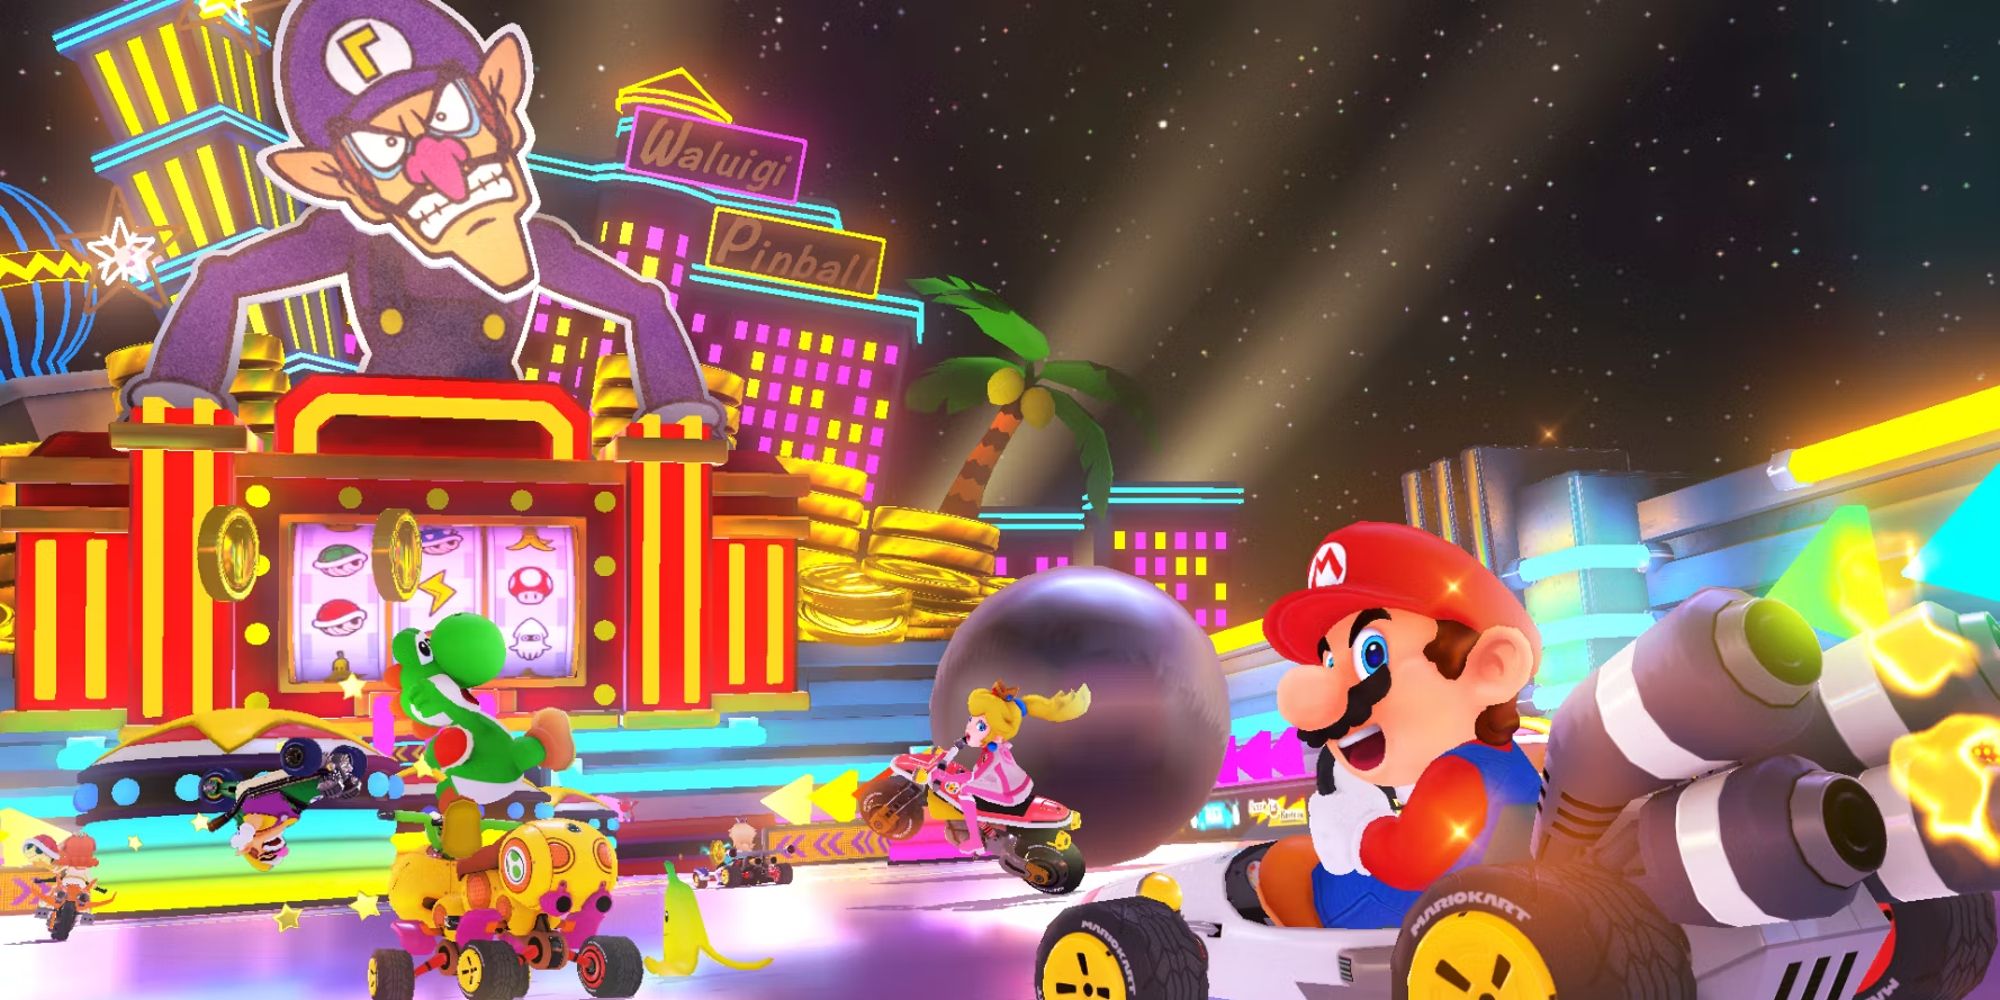 Mario driving a car through a circuit that shows a giant Waluigi decoration in Mario Kart 8 Deluxe.